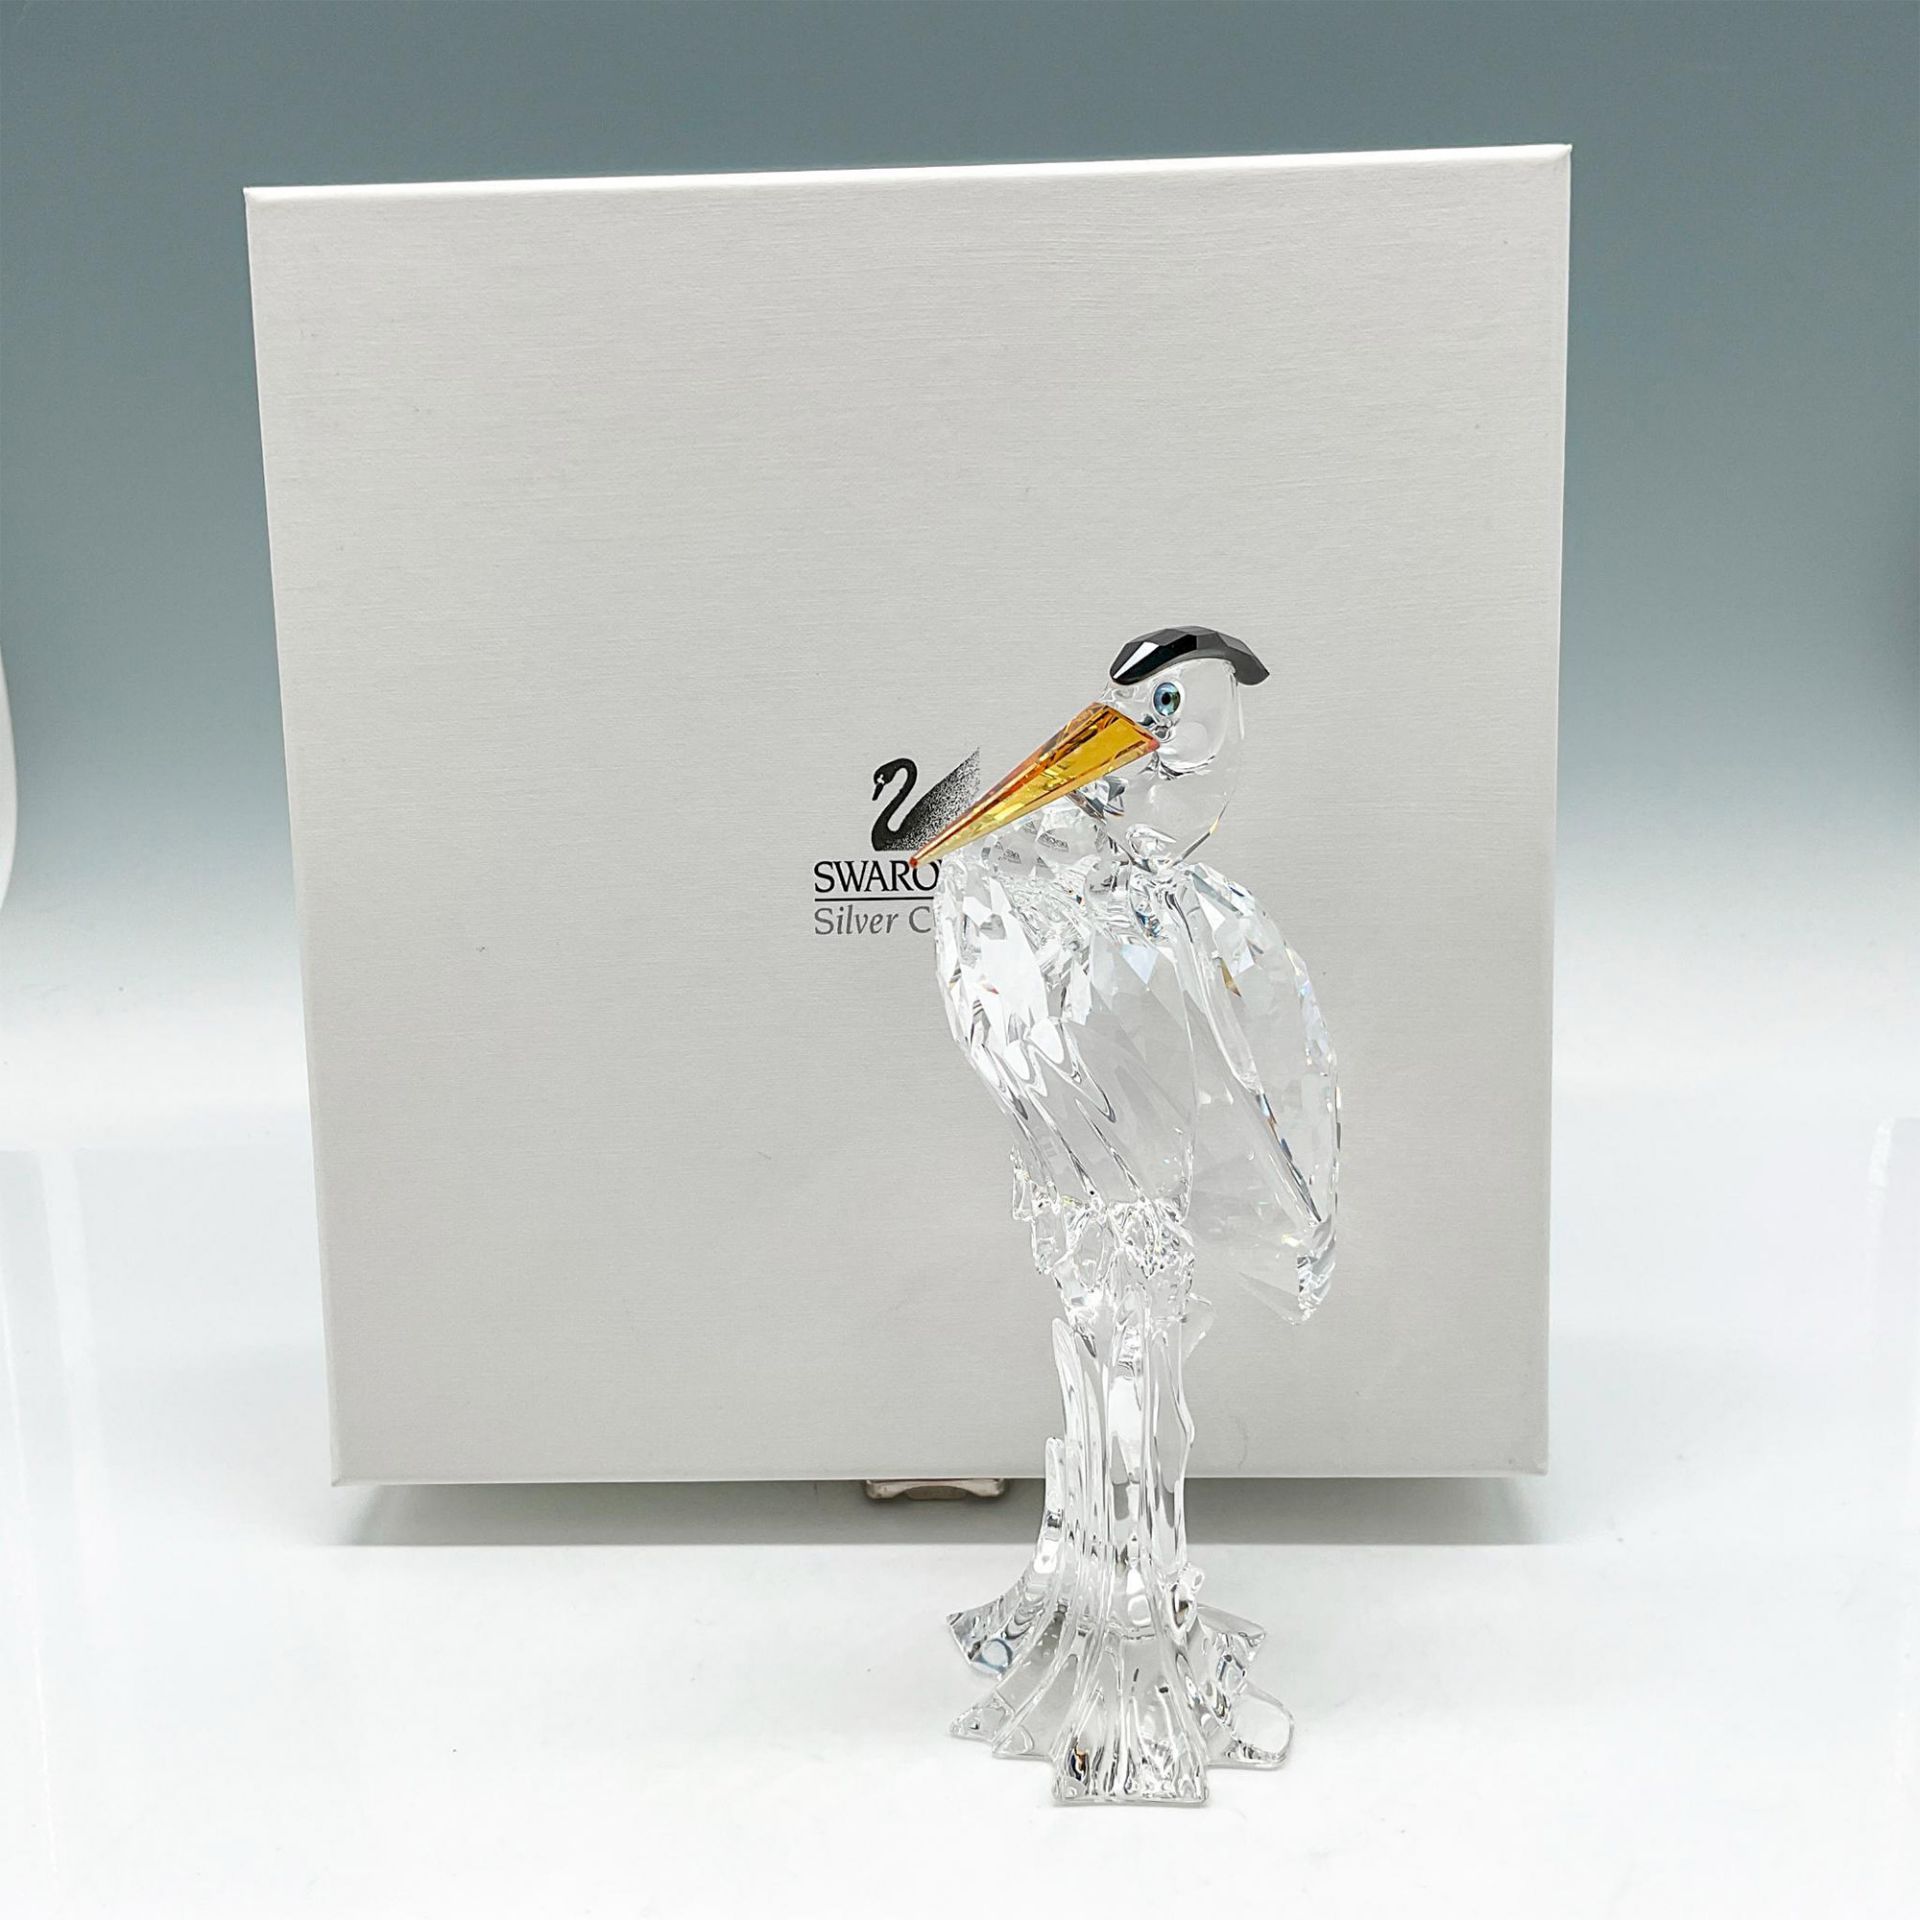 Swarovski Silver Crystal Figurine, Silver Heron - Image 4 of 4